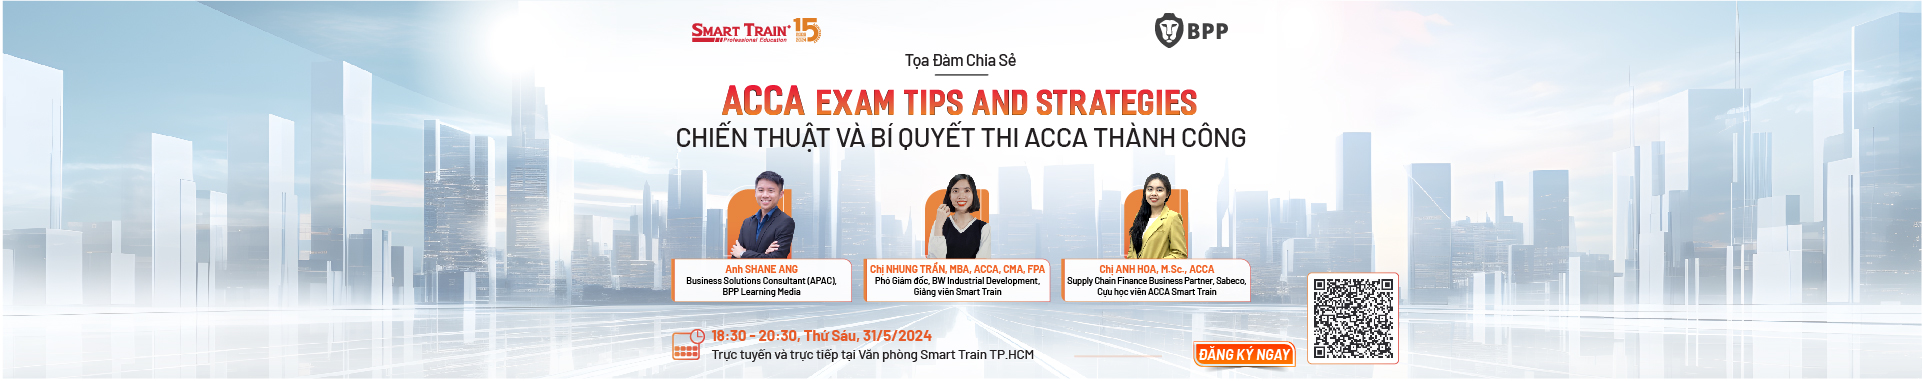 ACCA-Exam-Tips (2)